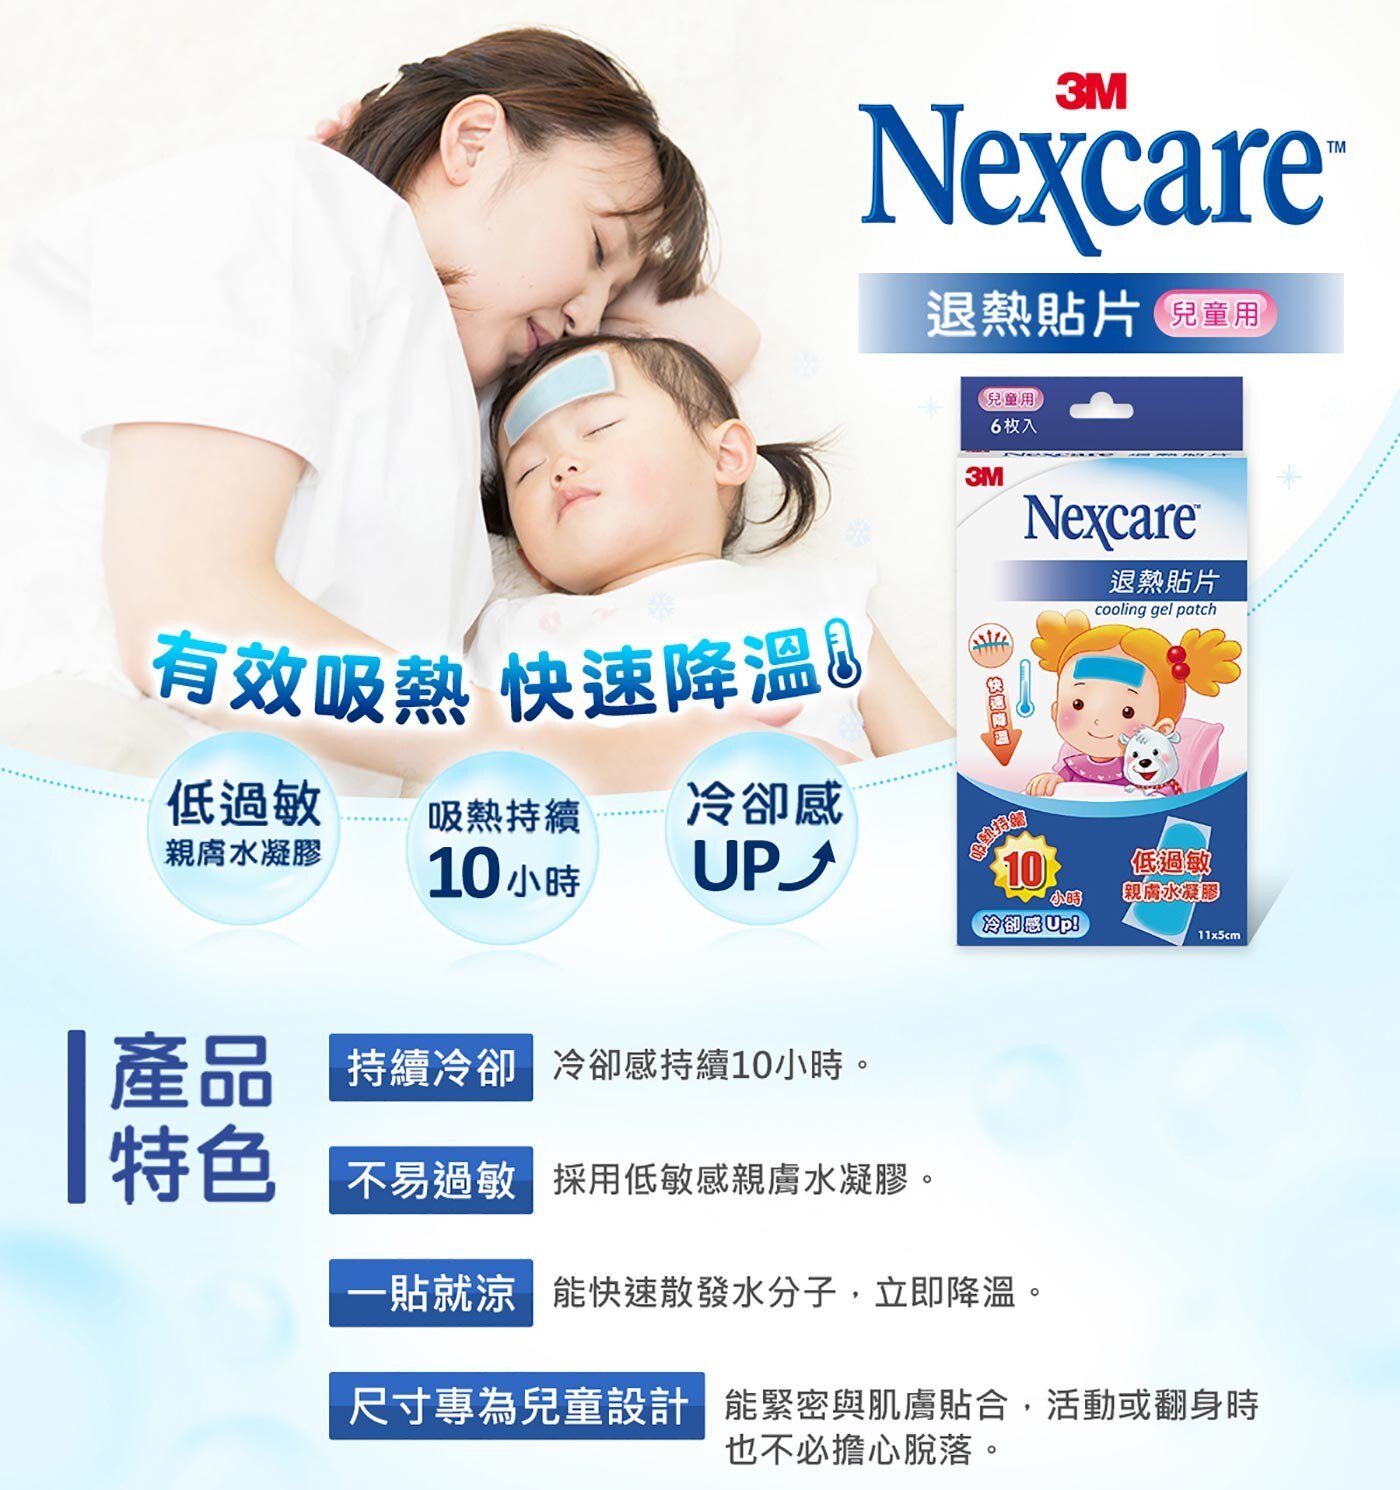 3M Nexcare 兒童用退熱貼片一貼就涼，冷卻感持續10小時，低過敏親膚水凝膠，可用於牙痛、肌肉腫脹不適。